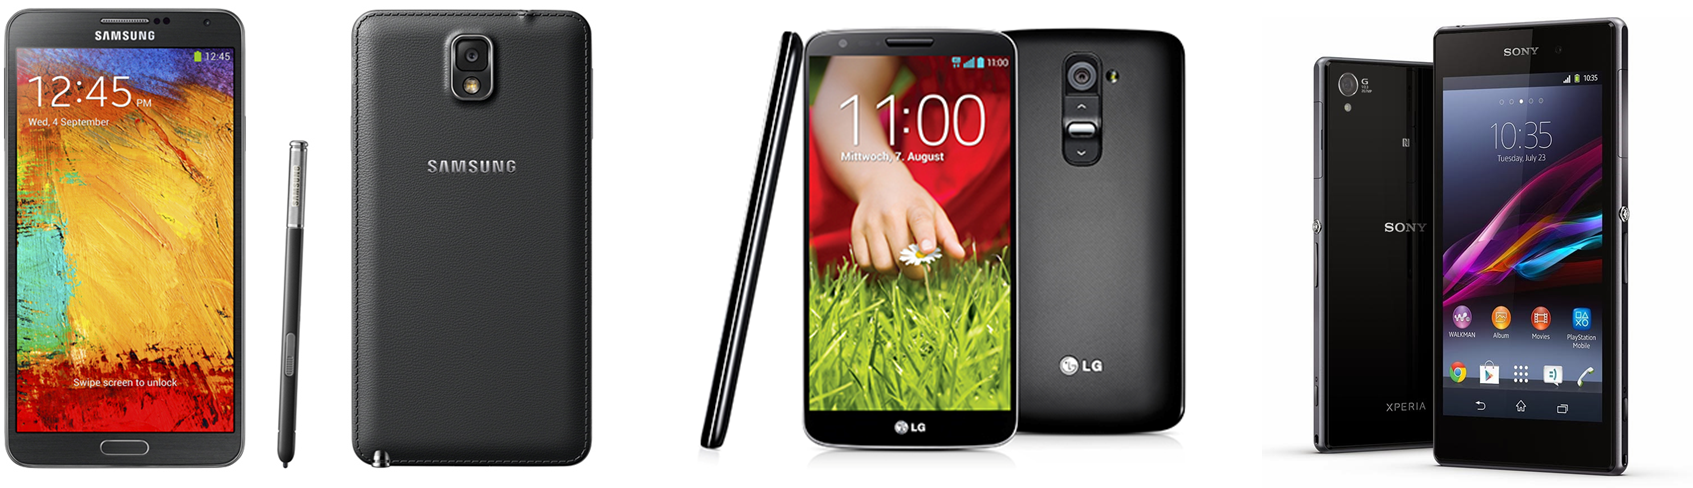 Samsung Galaxy Note 3, LG G2 in Sony Xperia Z1.